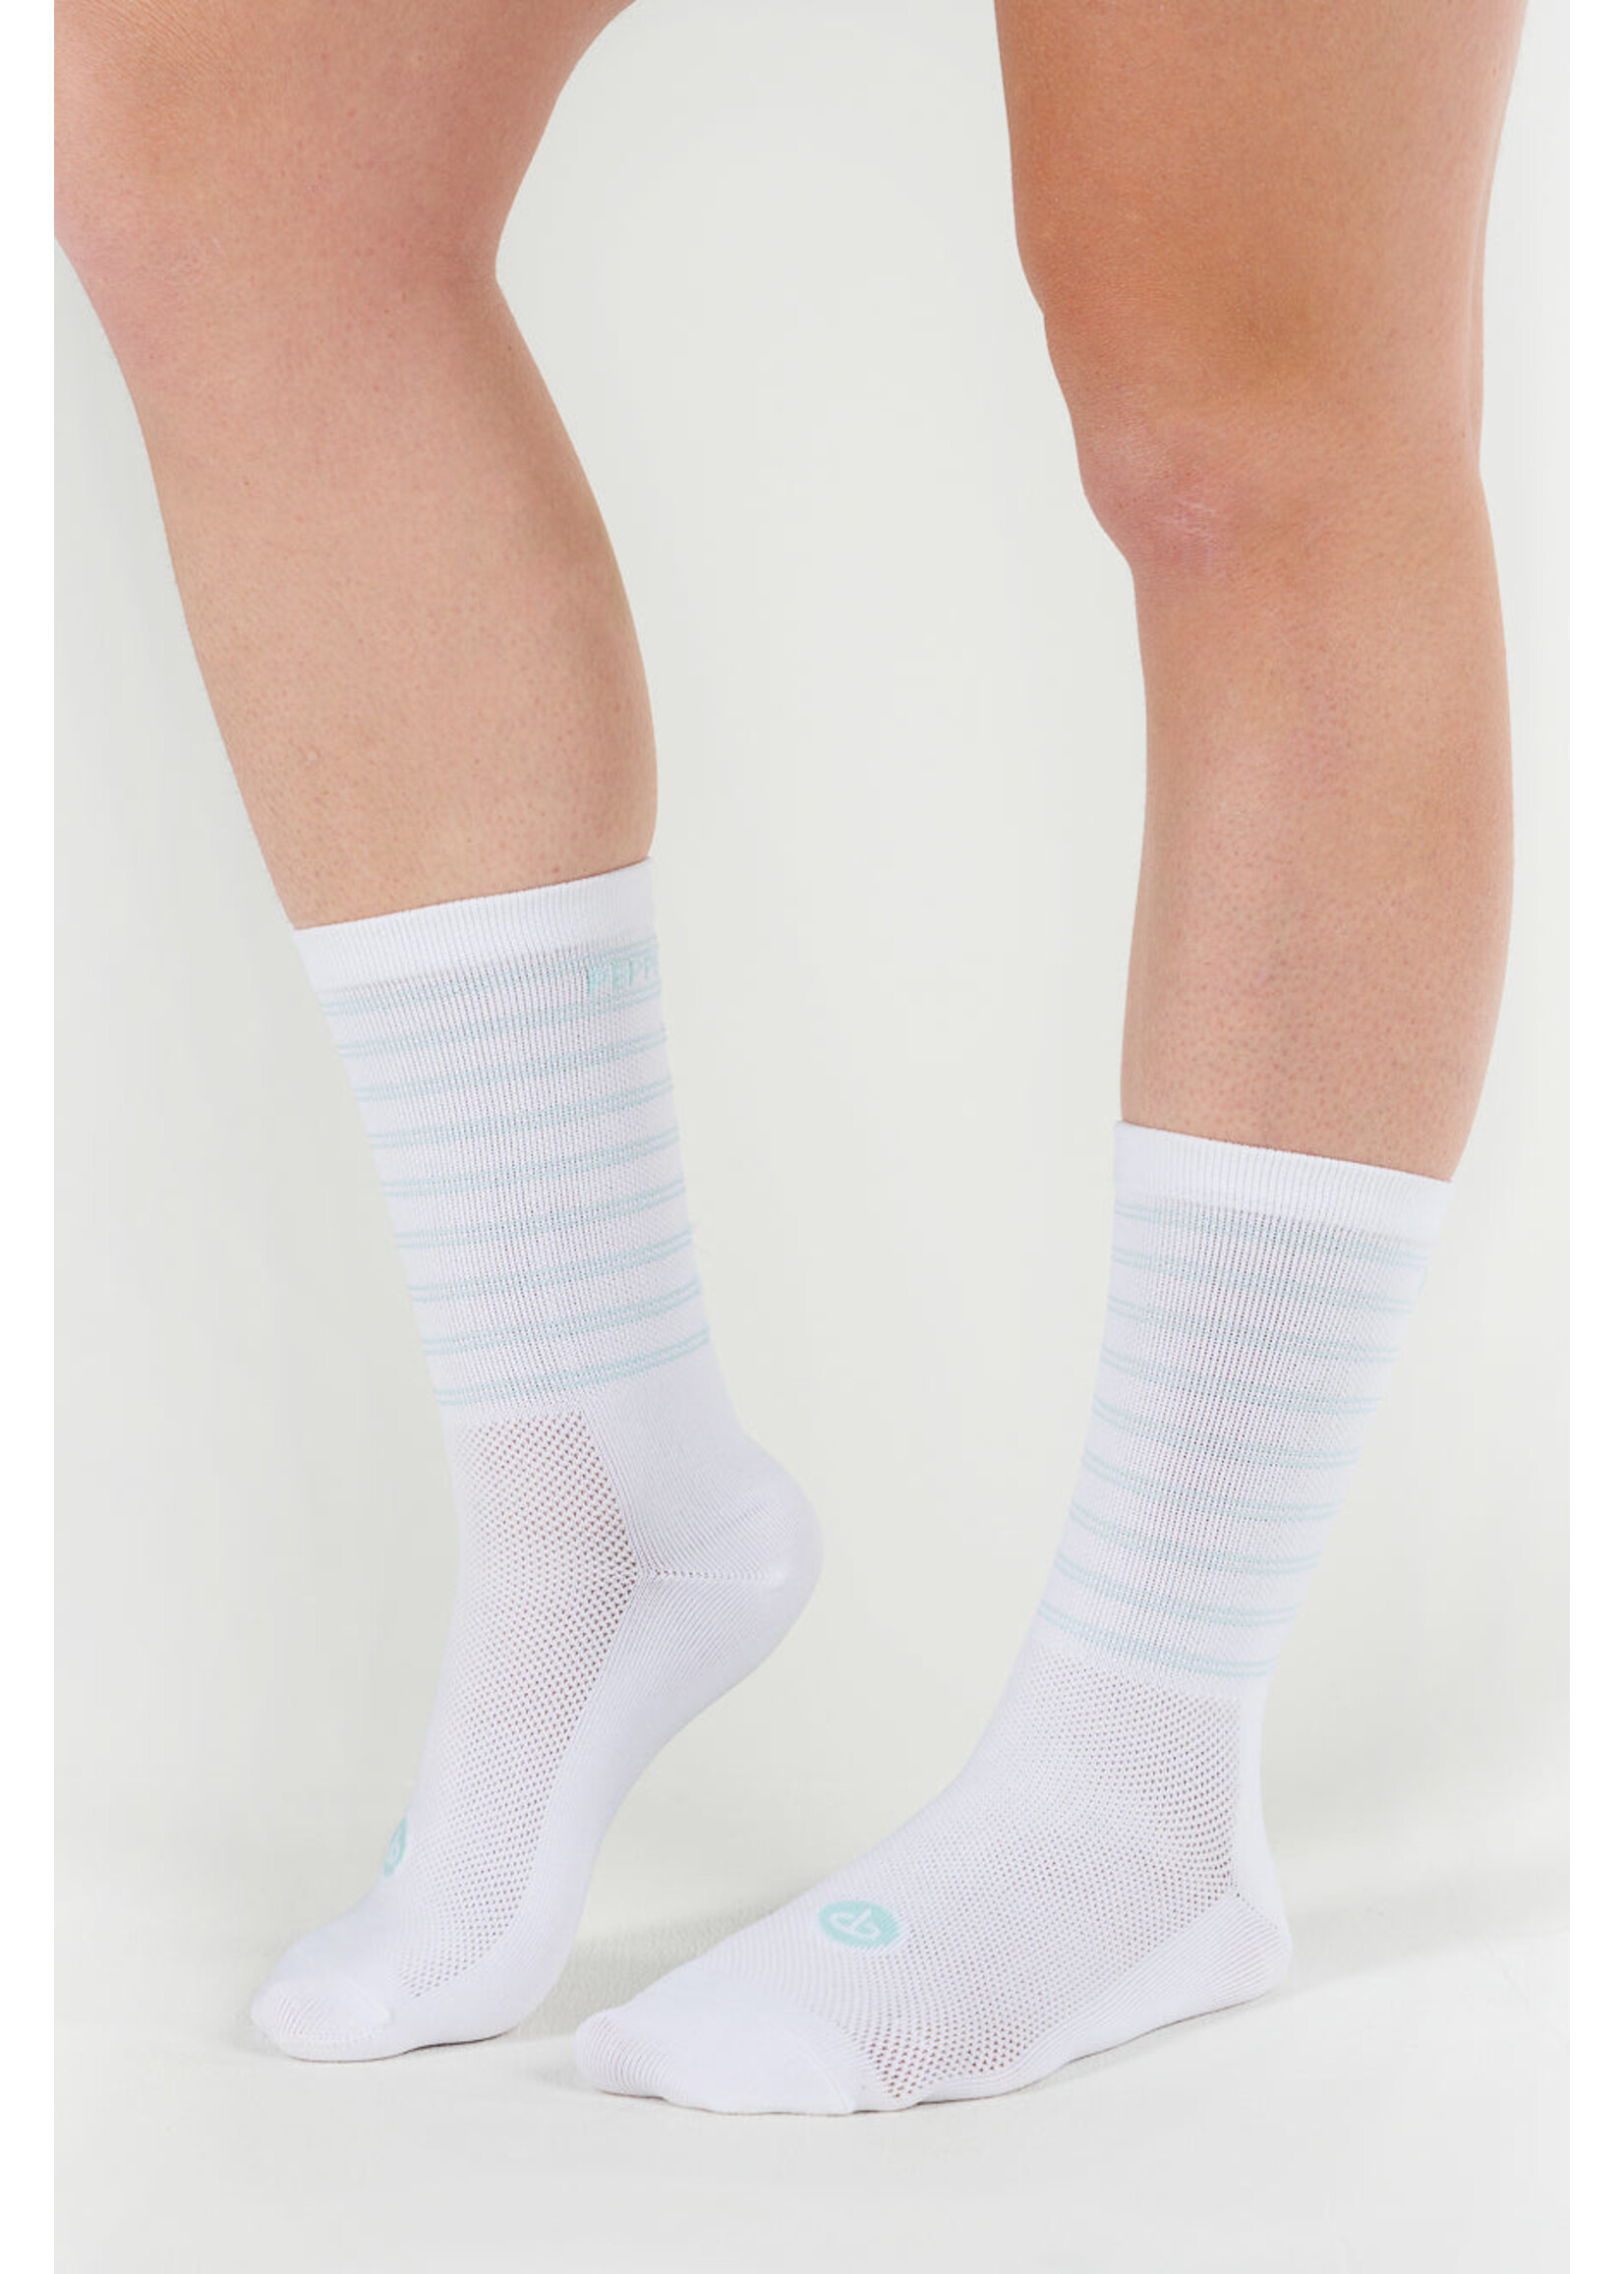 Peppermint Signature socks knit